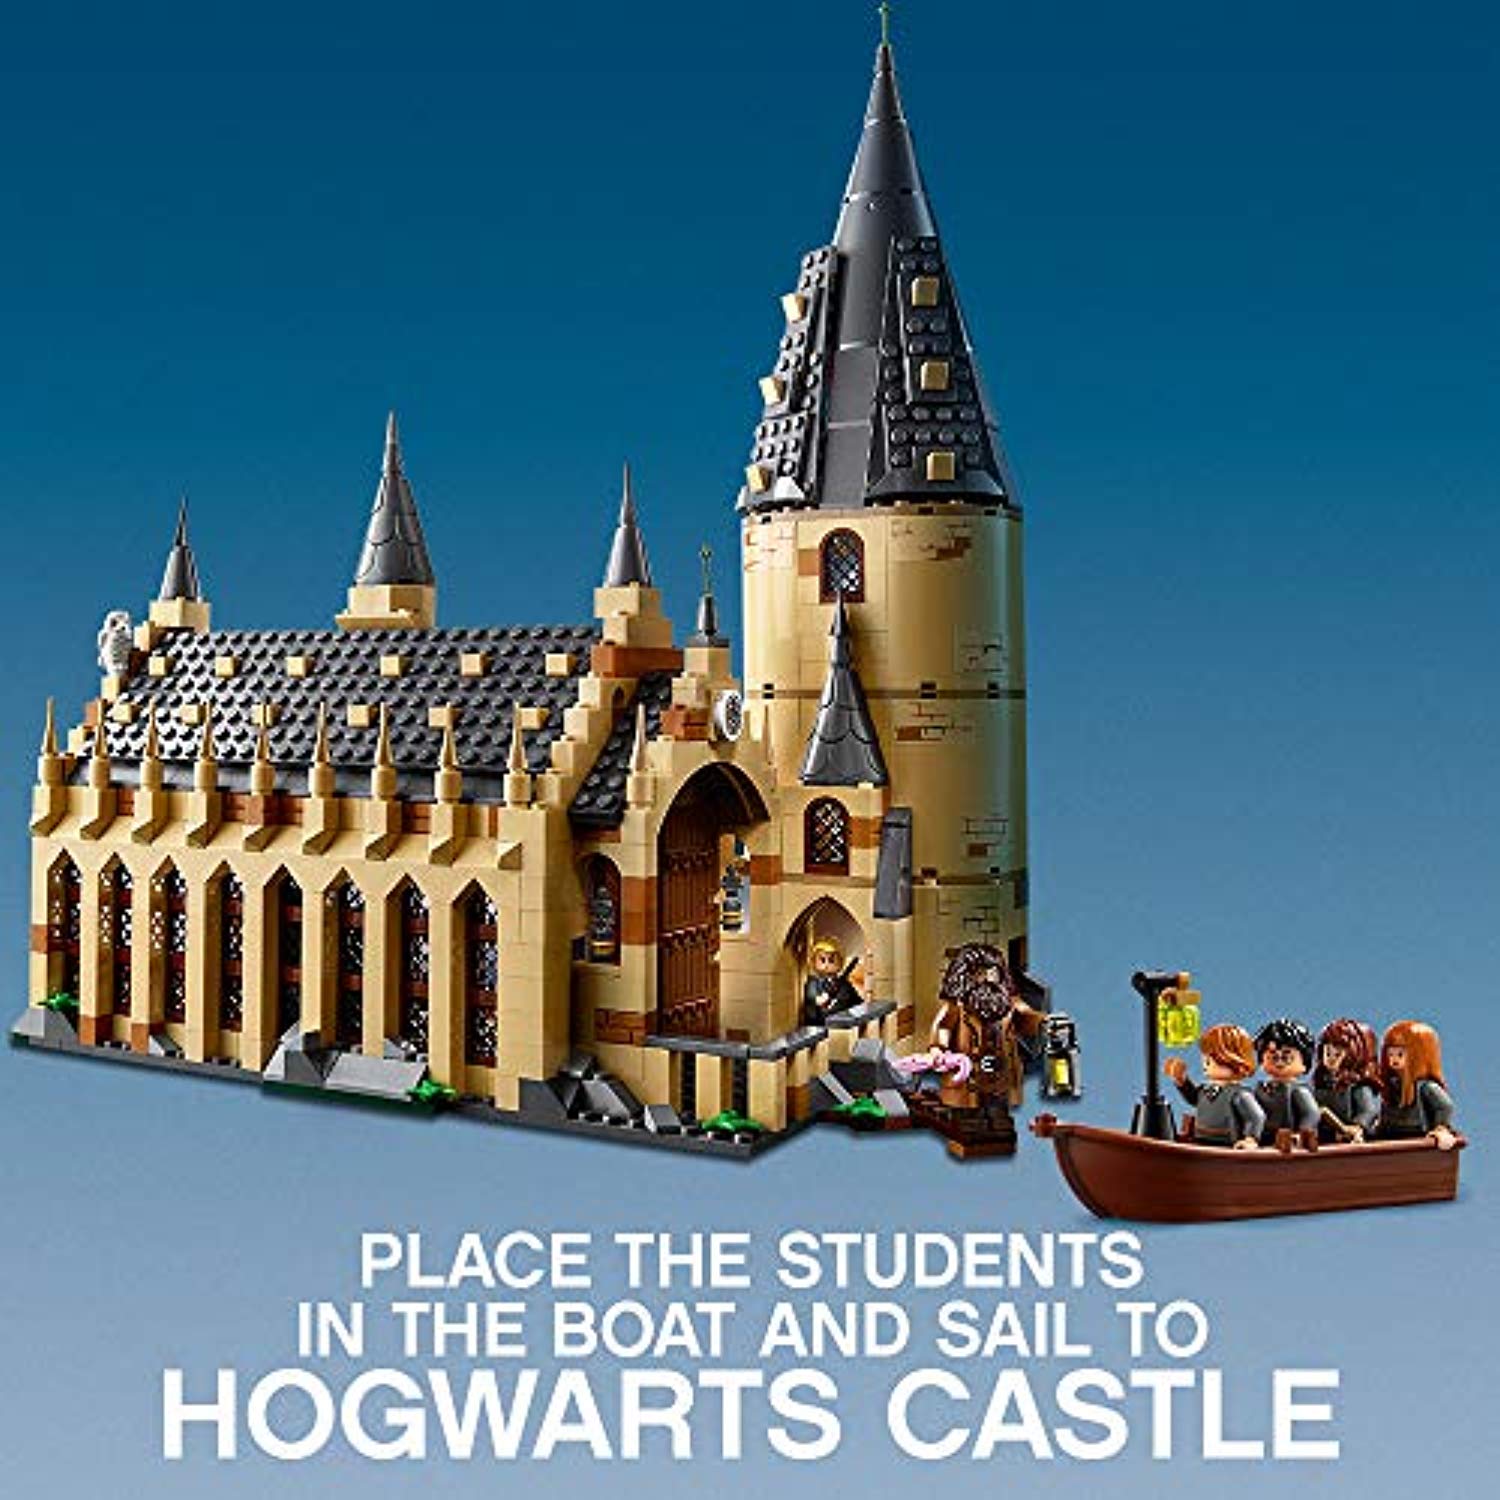 LEGO 75954 Harry Potter Hogwarts Great Hall Castle Toy, Gift Idea for Wizarding World Fan, Building Set for Kids - Offer Games